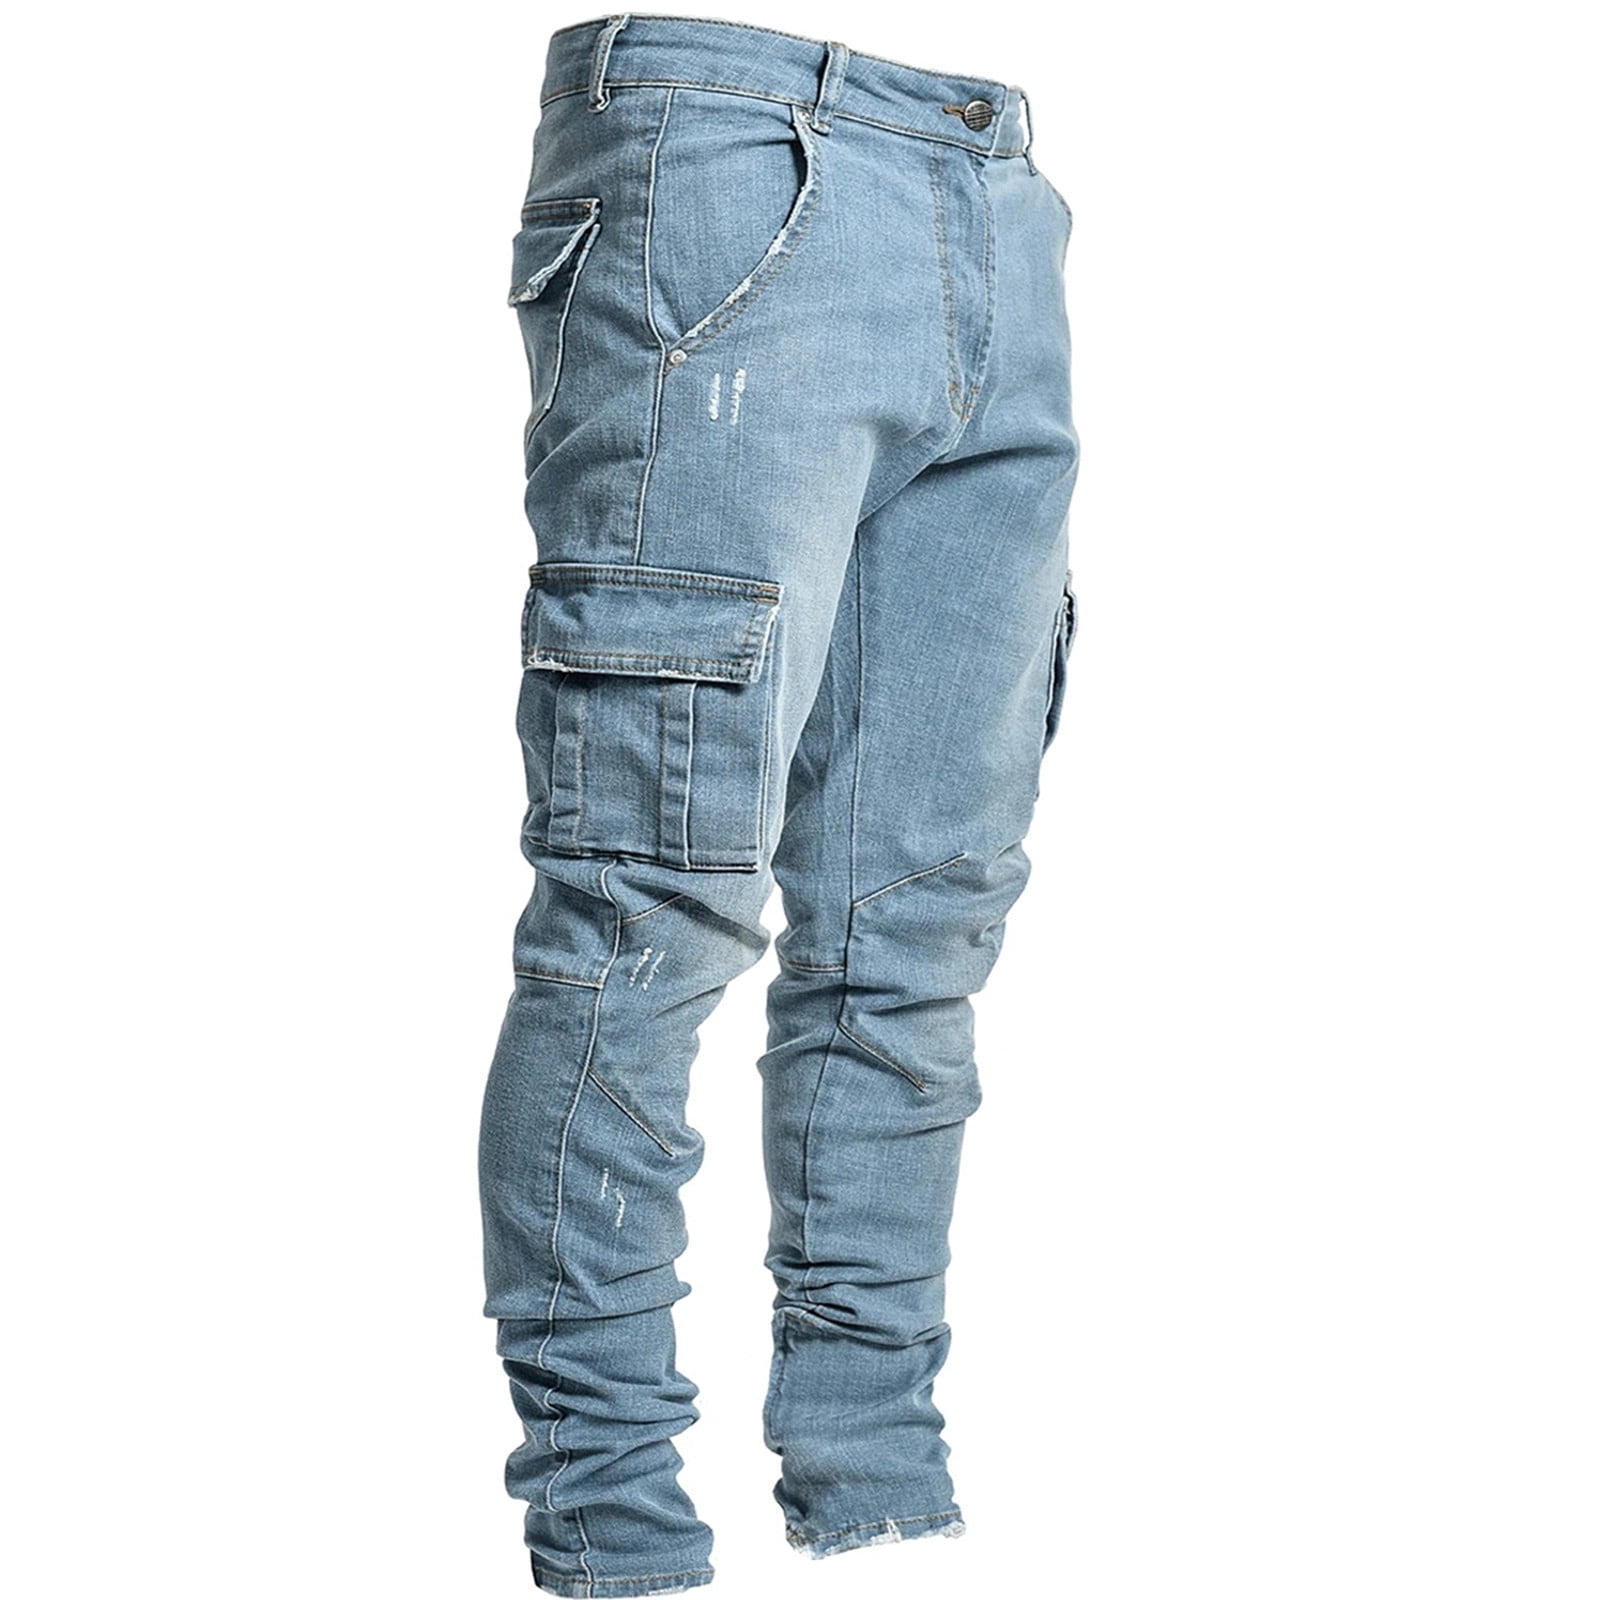 Dropship Men's Jeans Distressed Ripped Biker Moto Denim Pants Tapered Leg  Slim Fit Zipper Black to Sell Online at a Lower Price | Doba